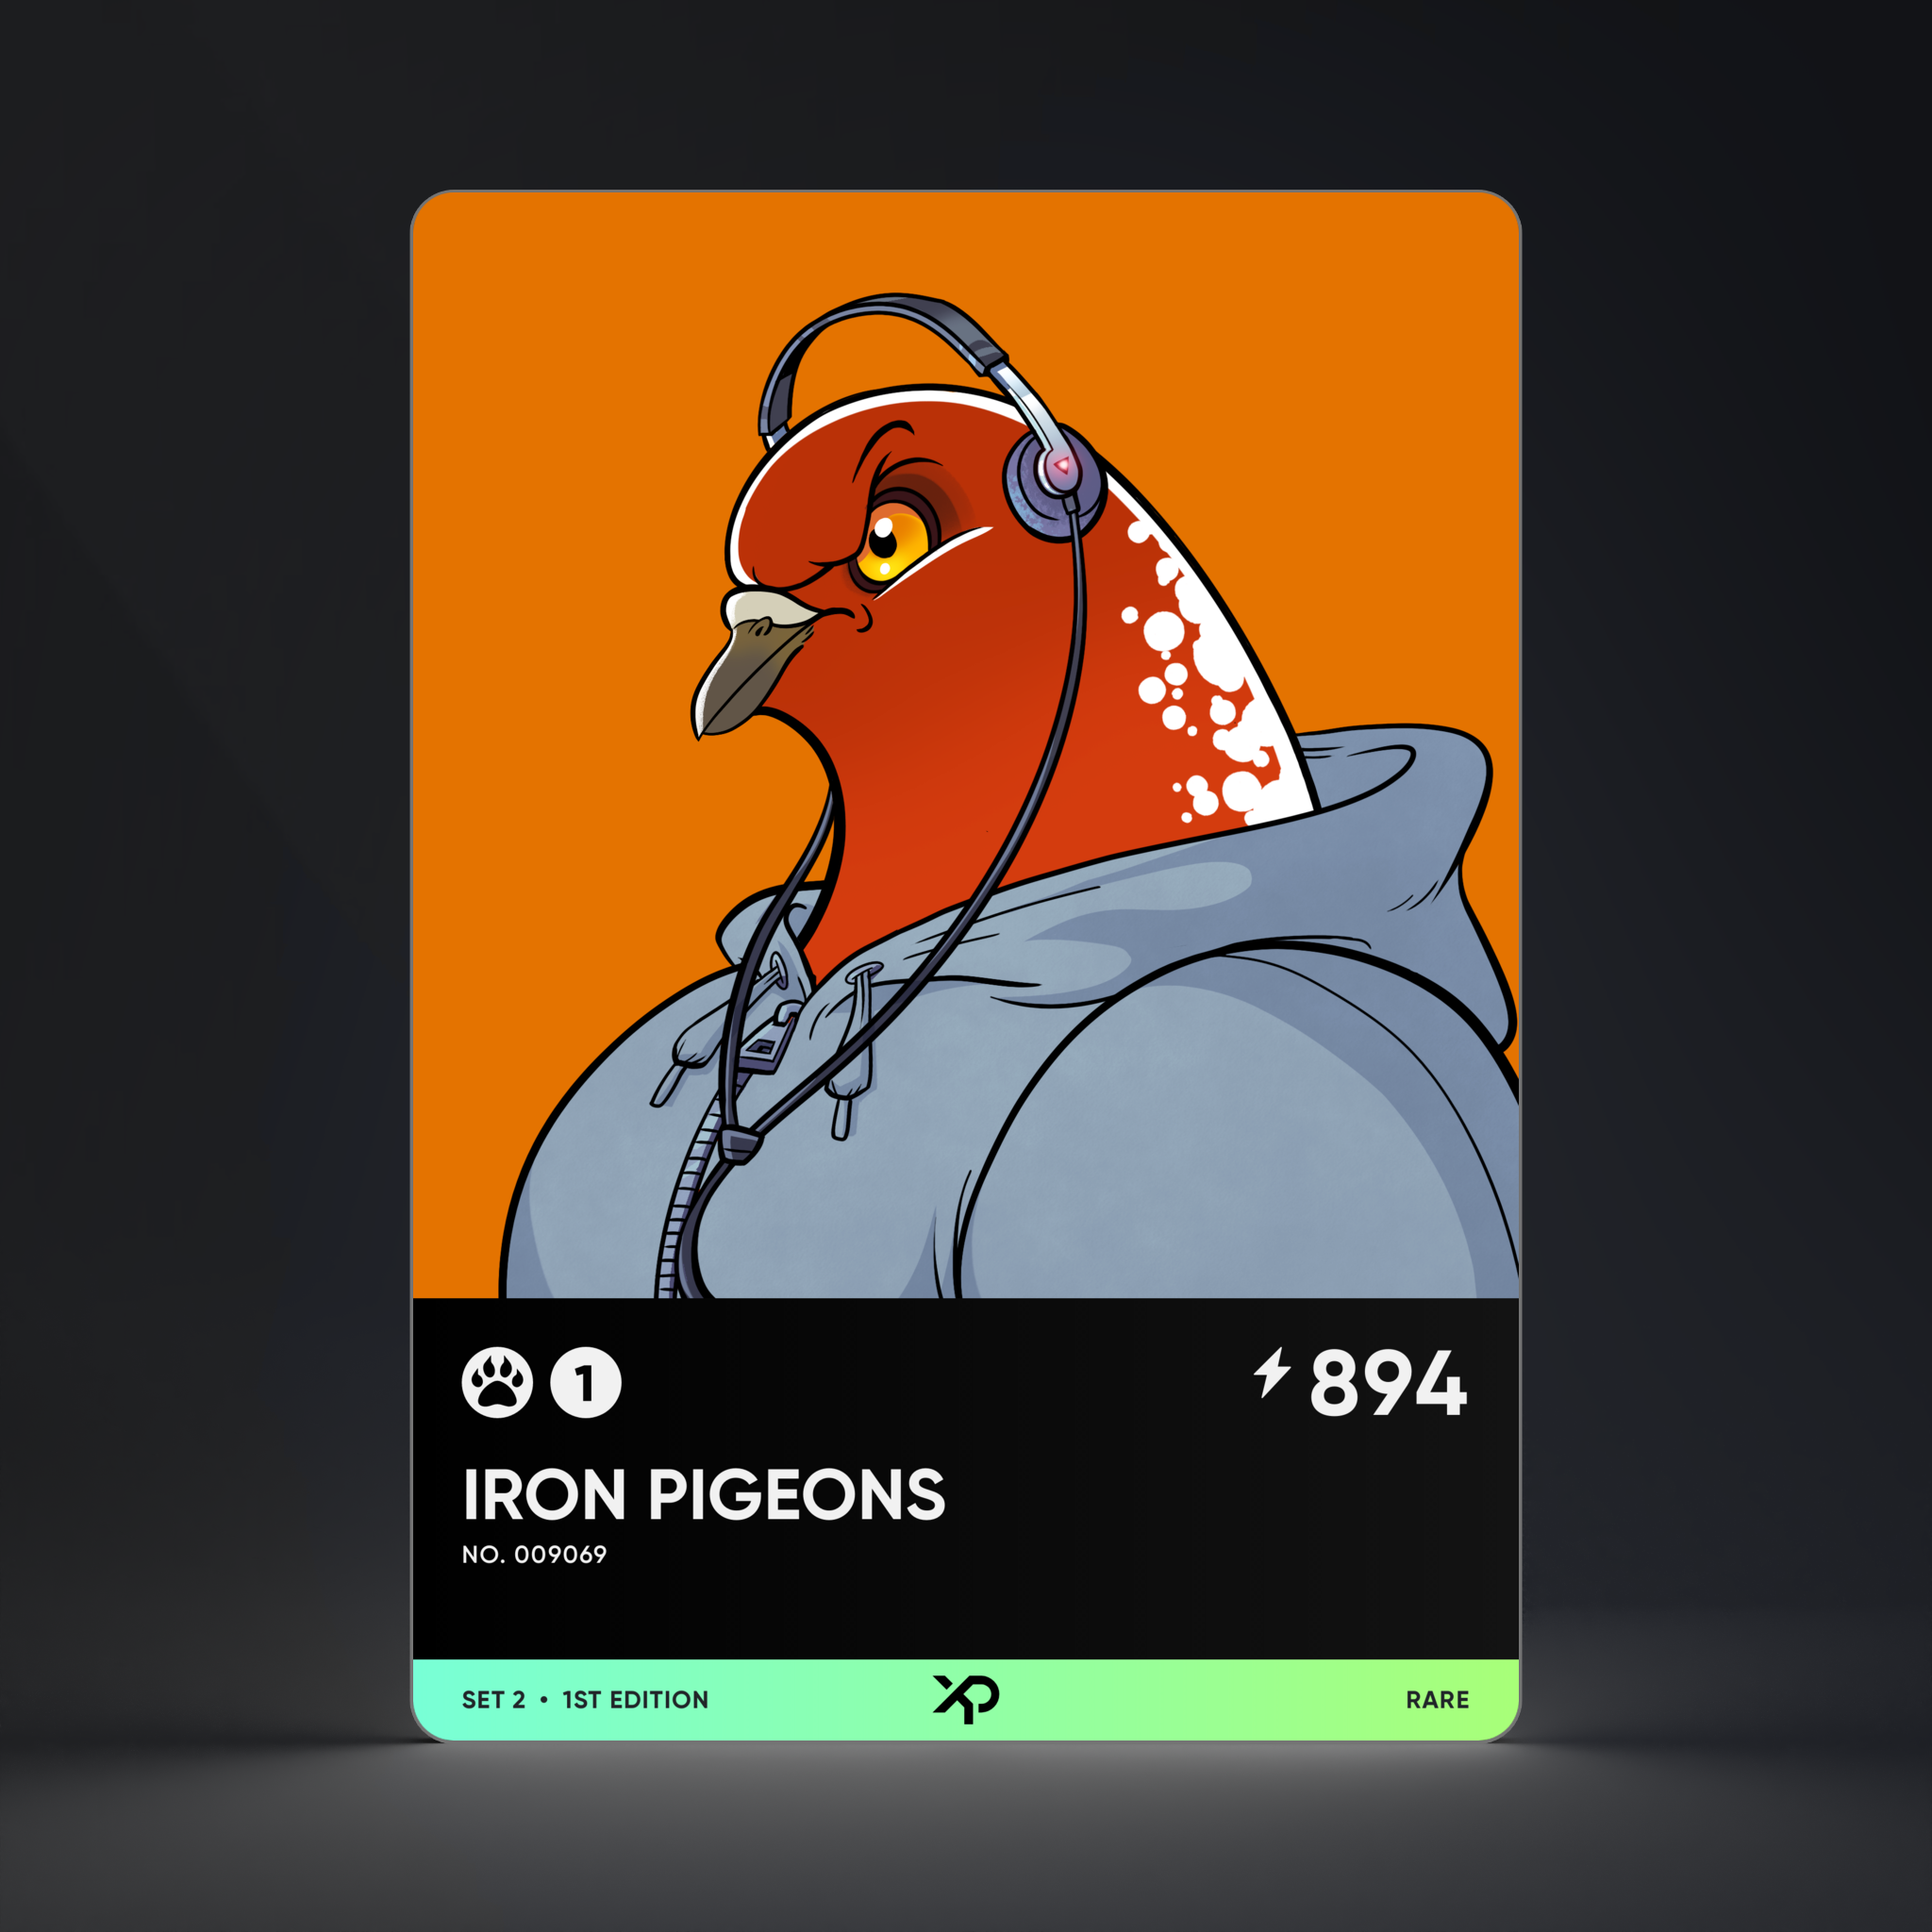 Iron Pigeon #9069 1st Edition